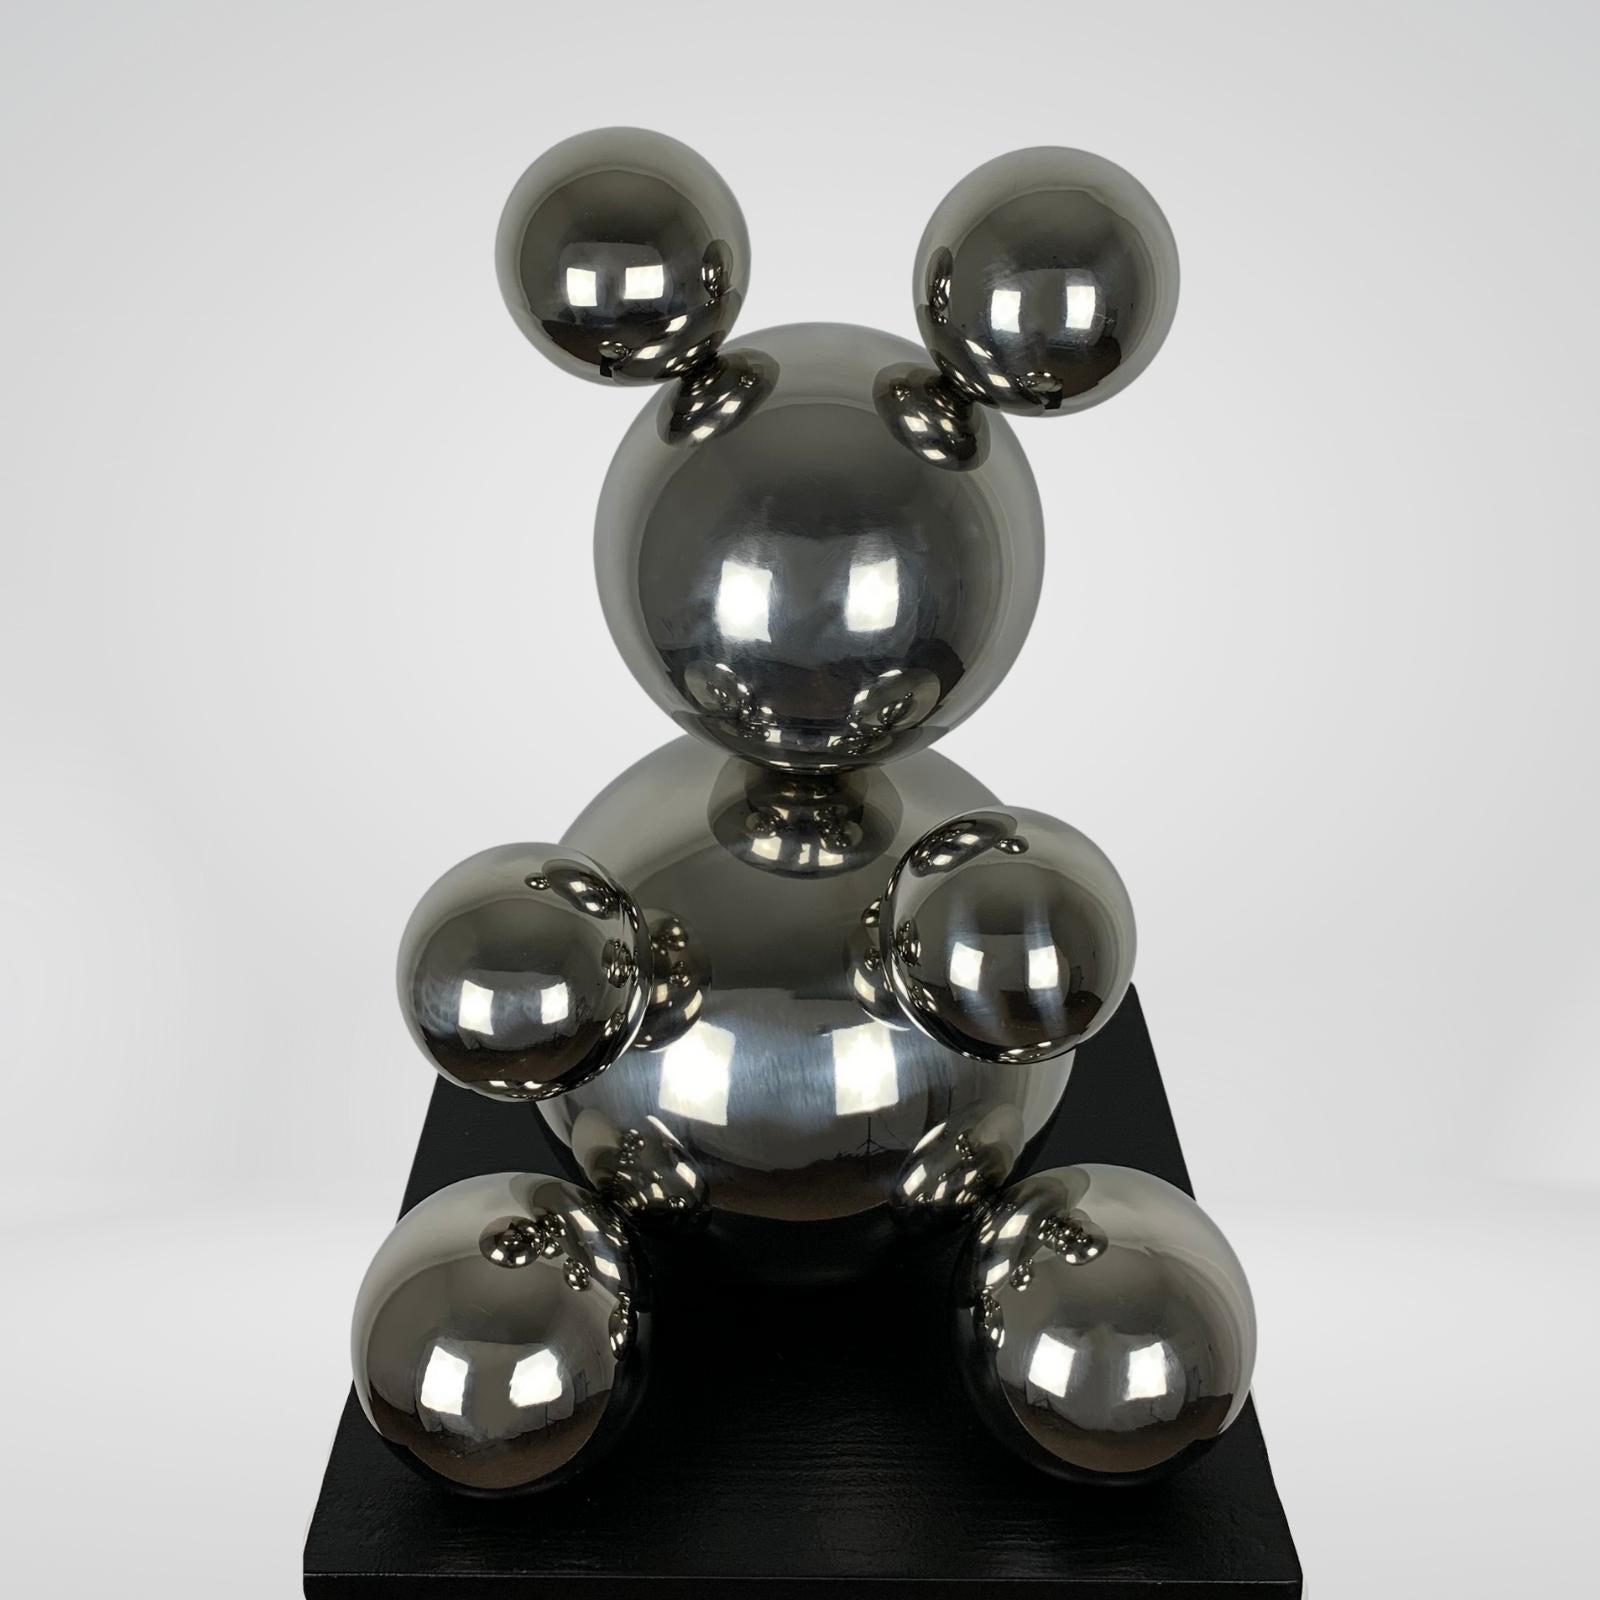 Big Stainless Steel Bear, Minimalistic Animal Sculpture - Black Figurative Sculpture by Rostyslav Kozhman